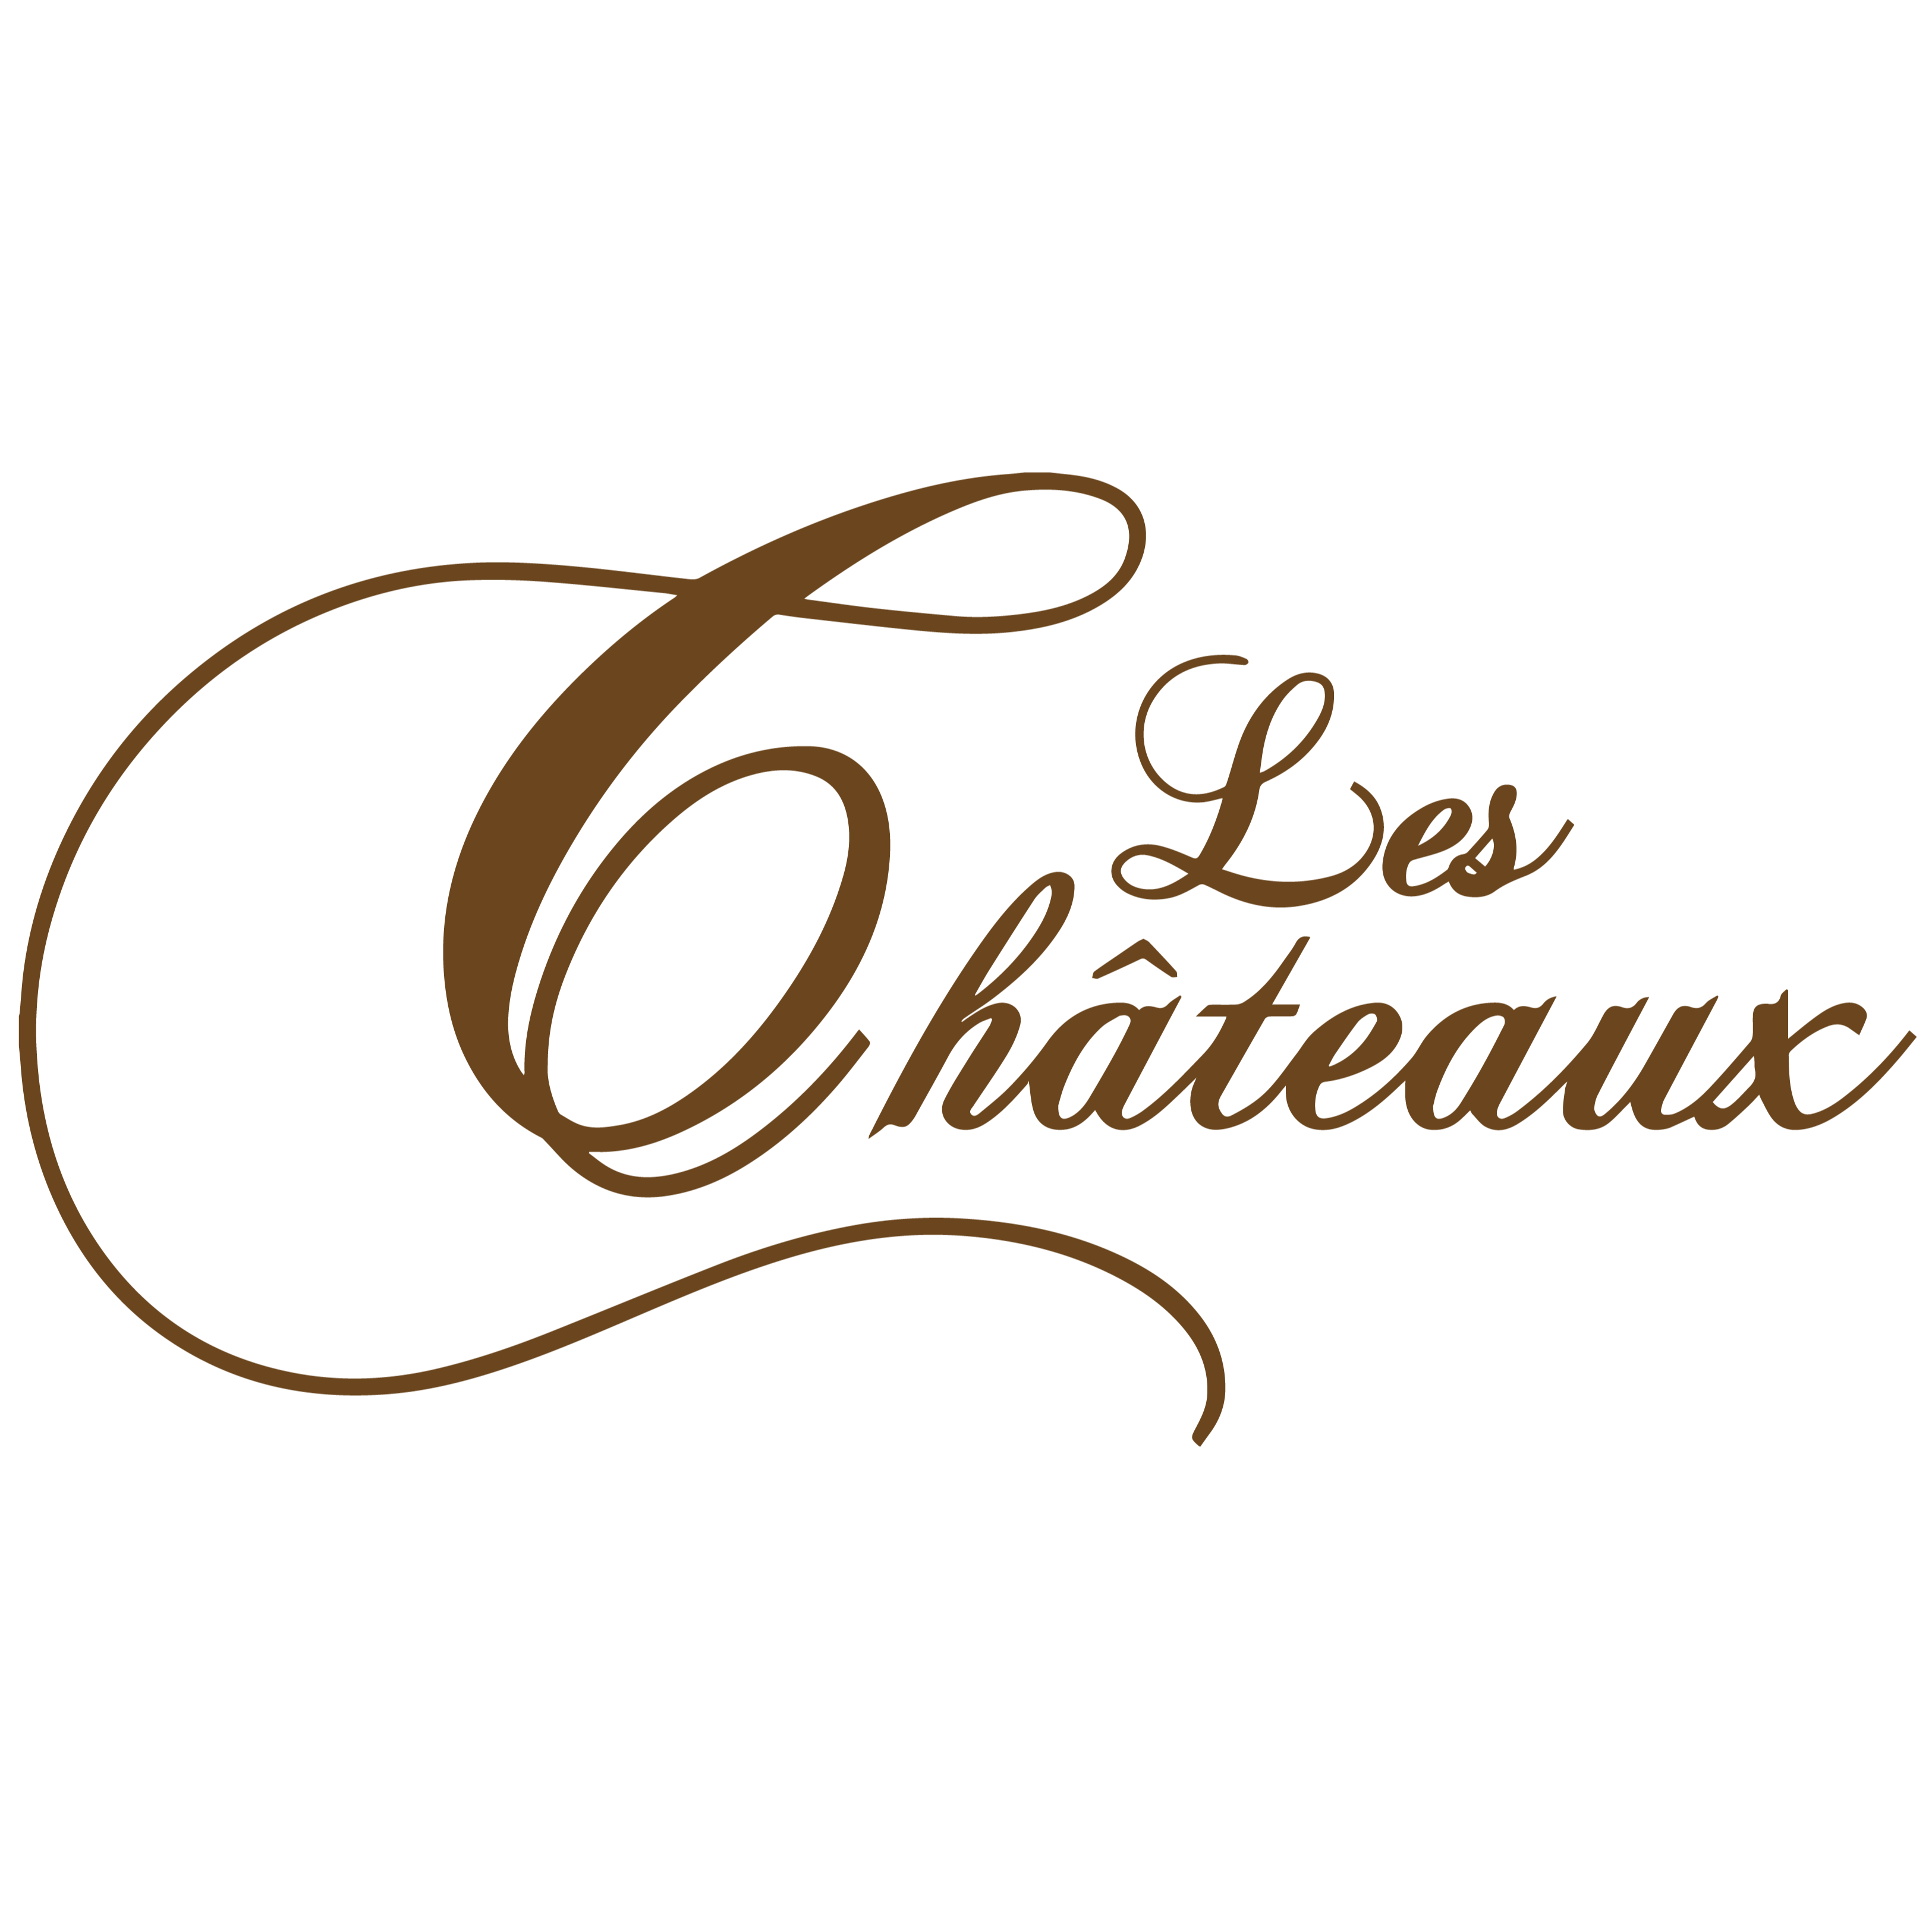 Les Chateaux - Duluth, MN 55804 - (218)520-8635 | ShowMeLocal.com